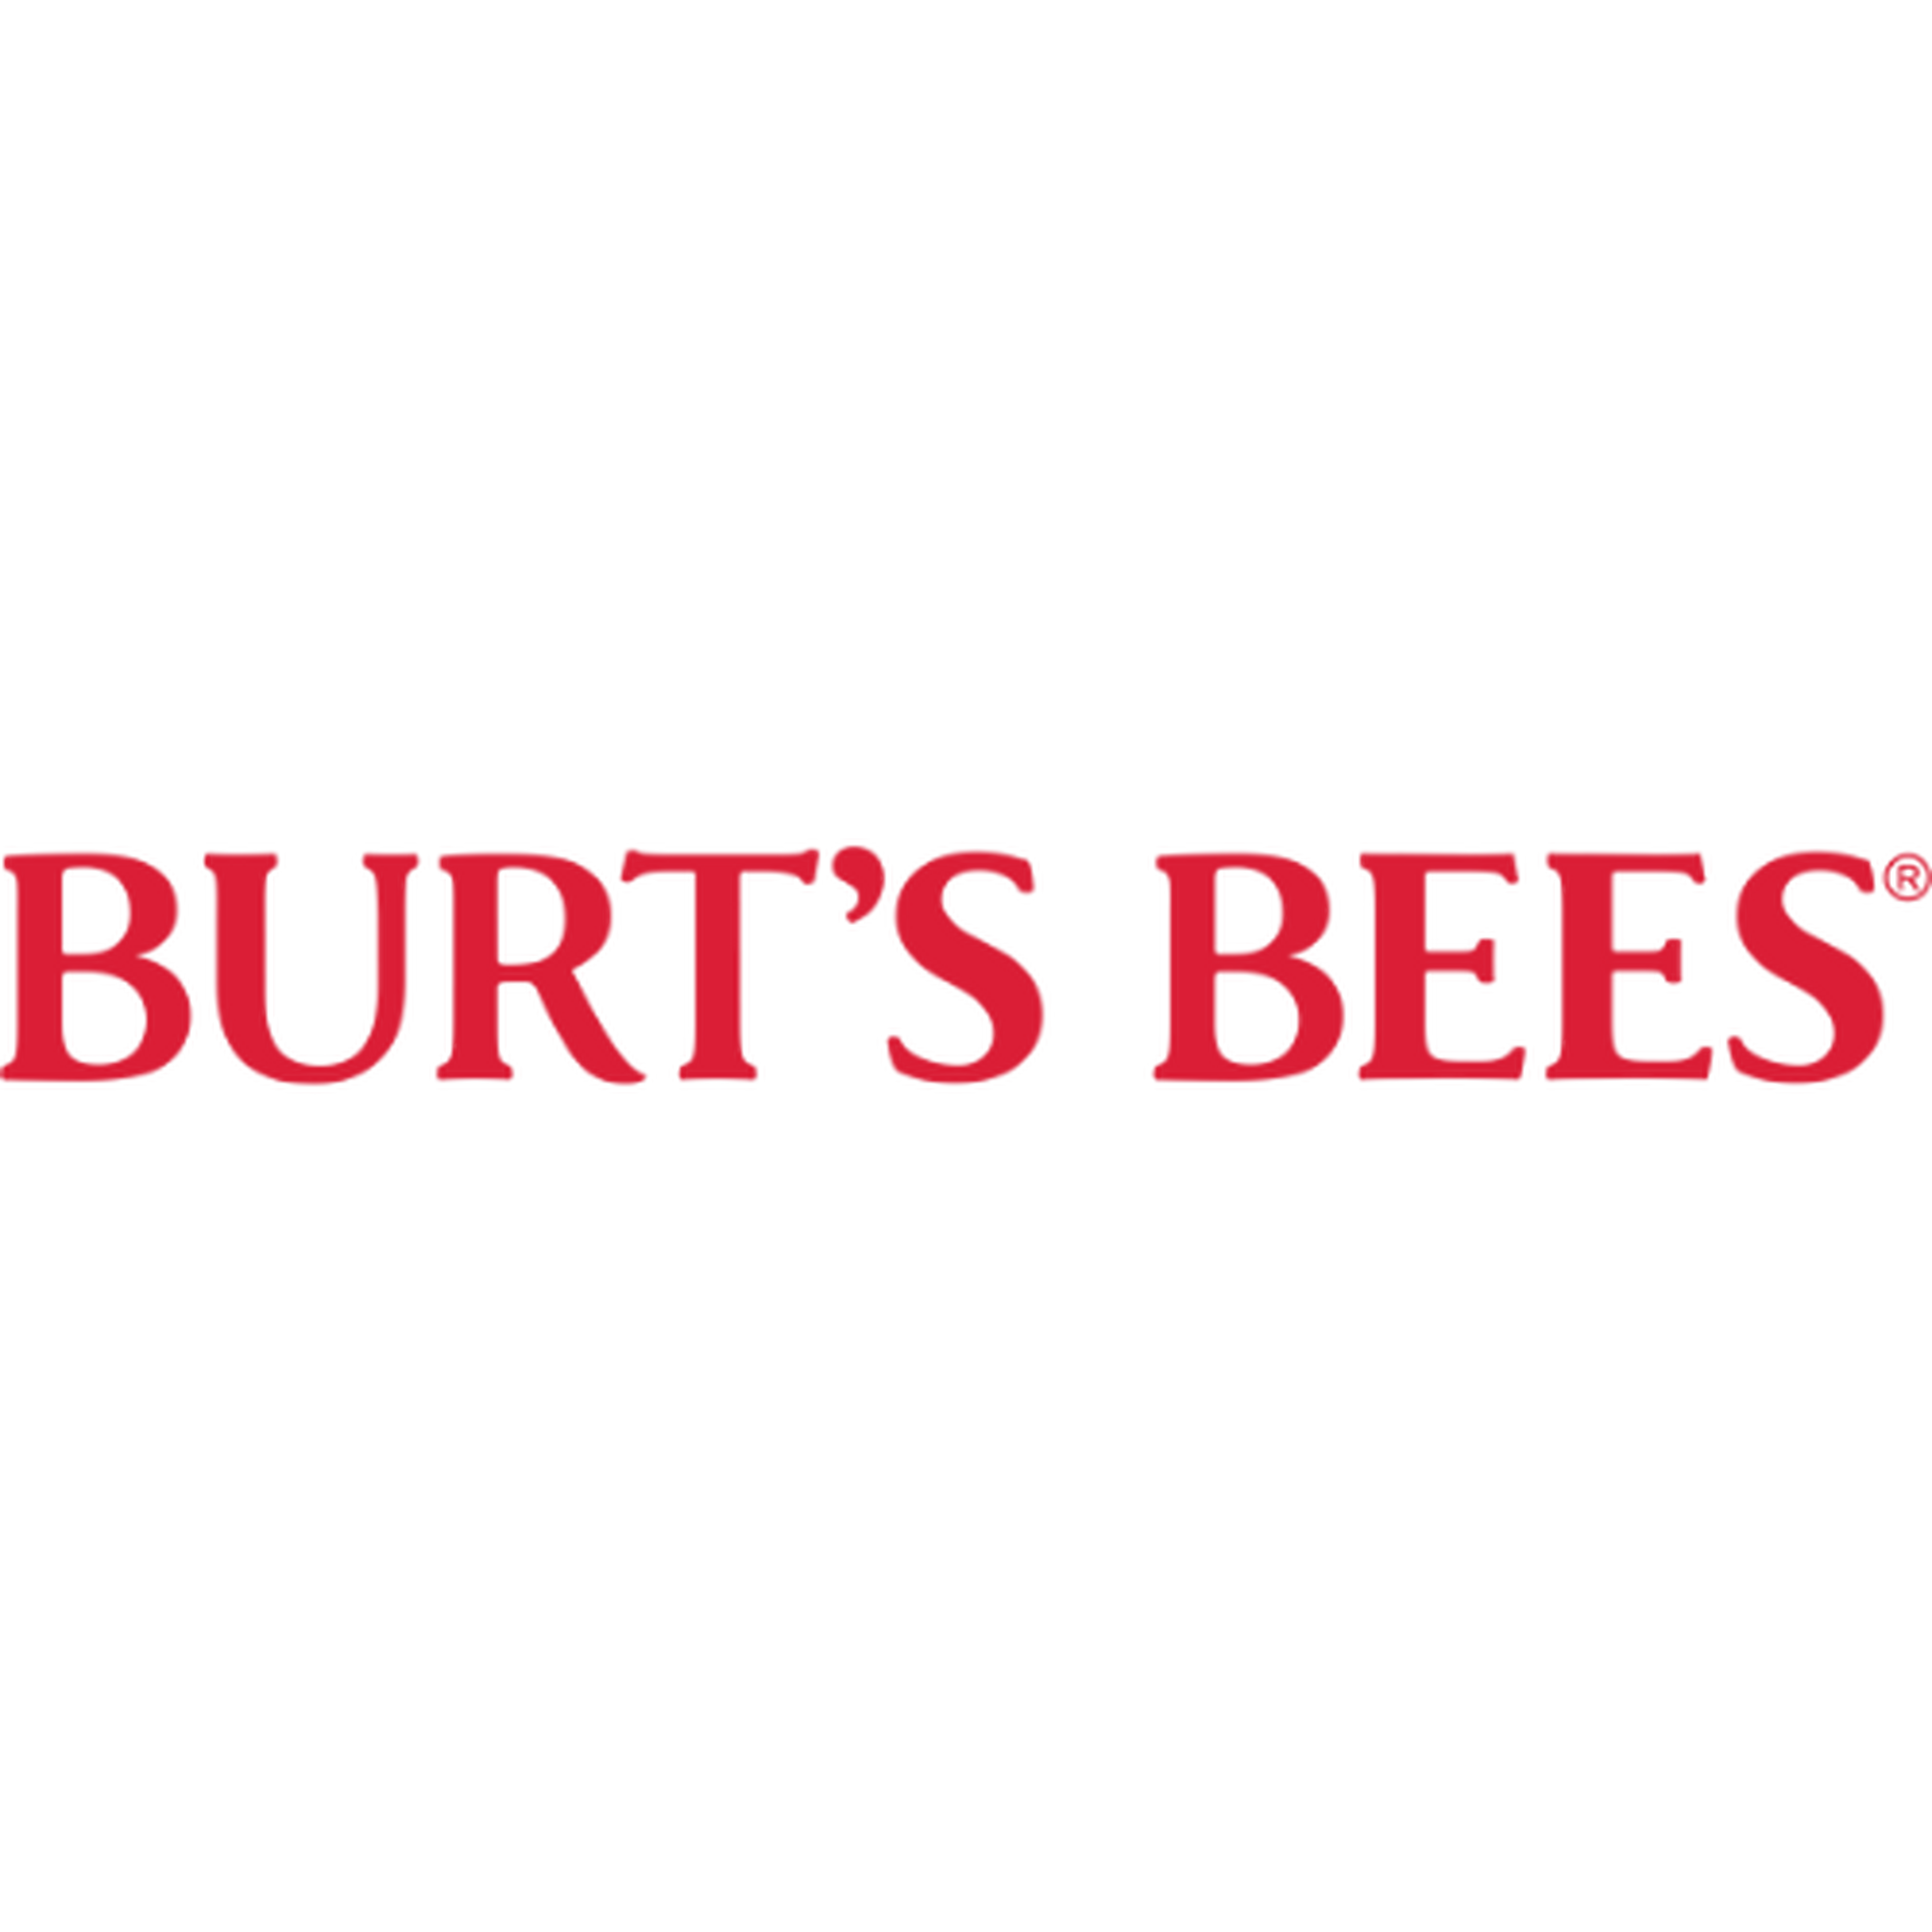 Burt's Bees logotype